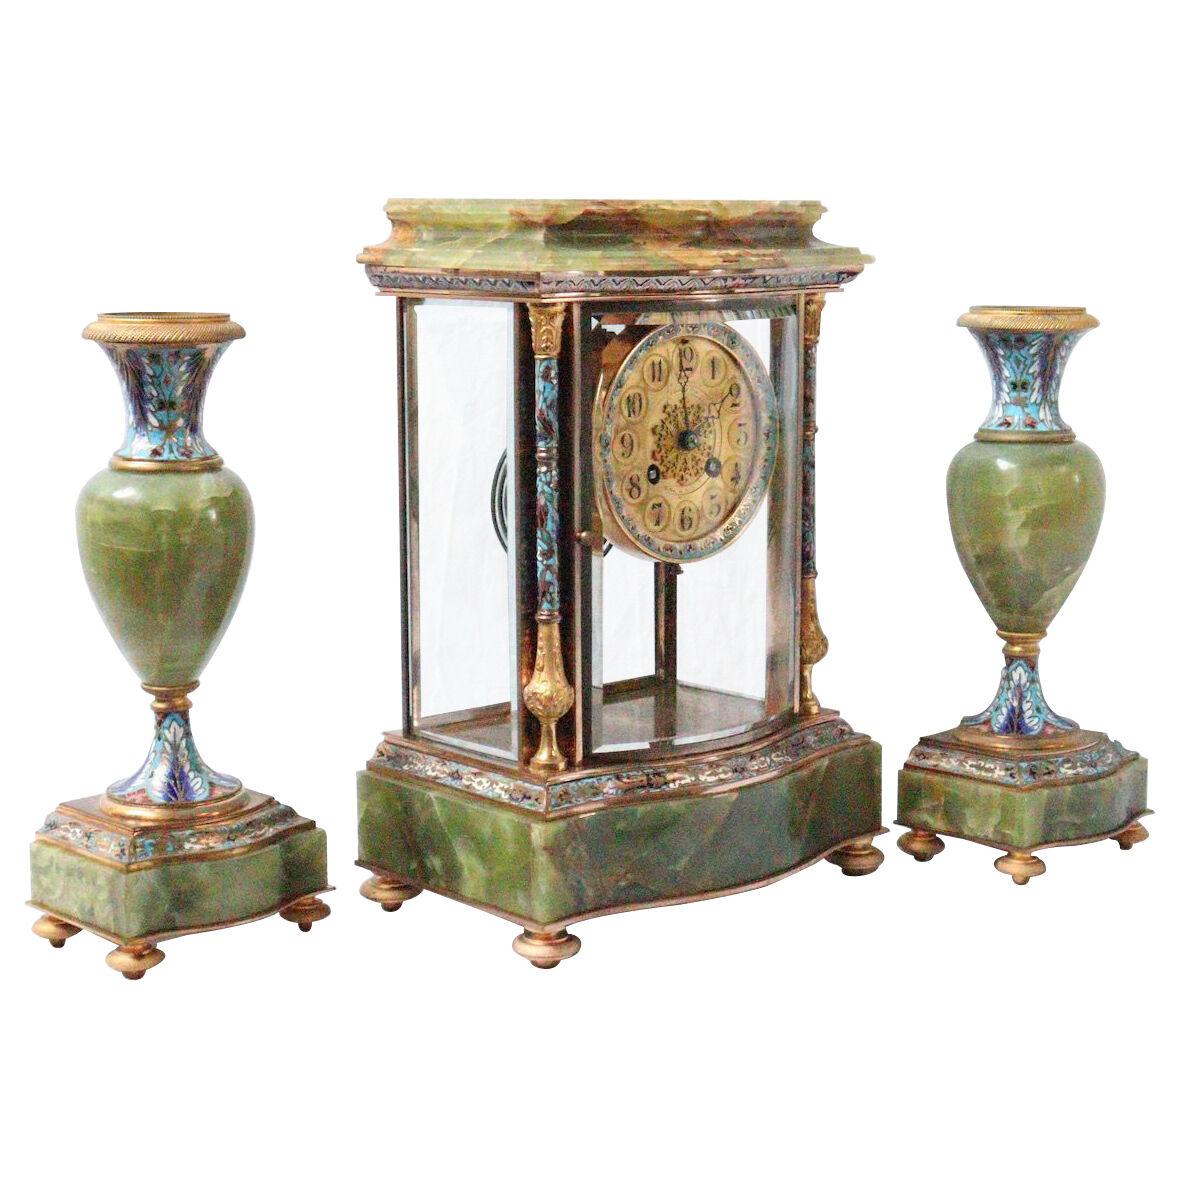 A 19th Ccentury French Ormolu and Champlevé Enamel Three-Pieces Clock Garniture